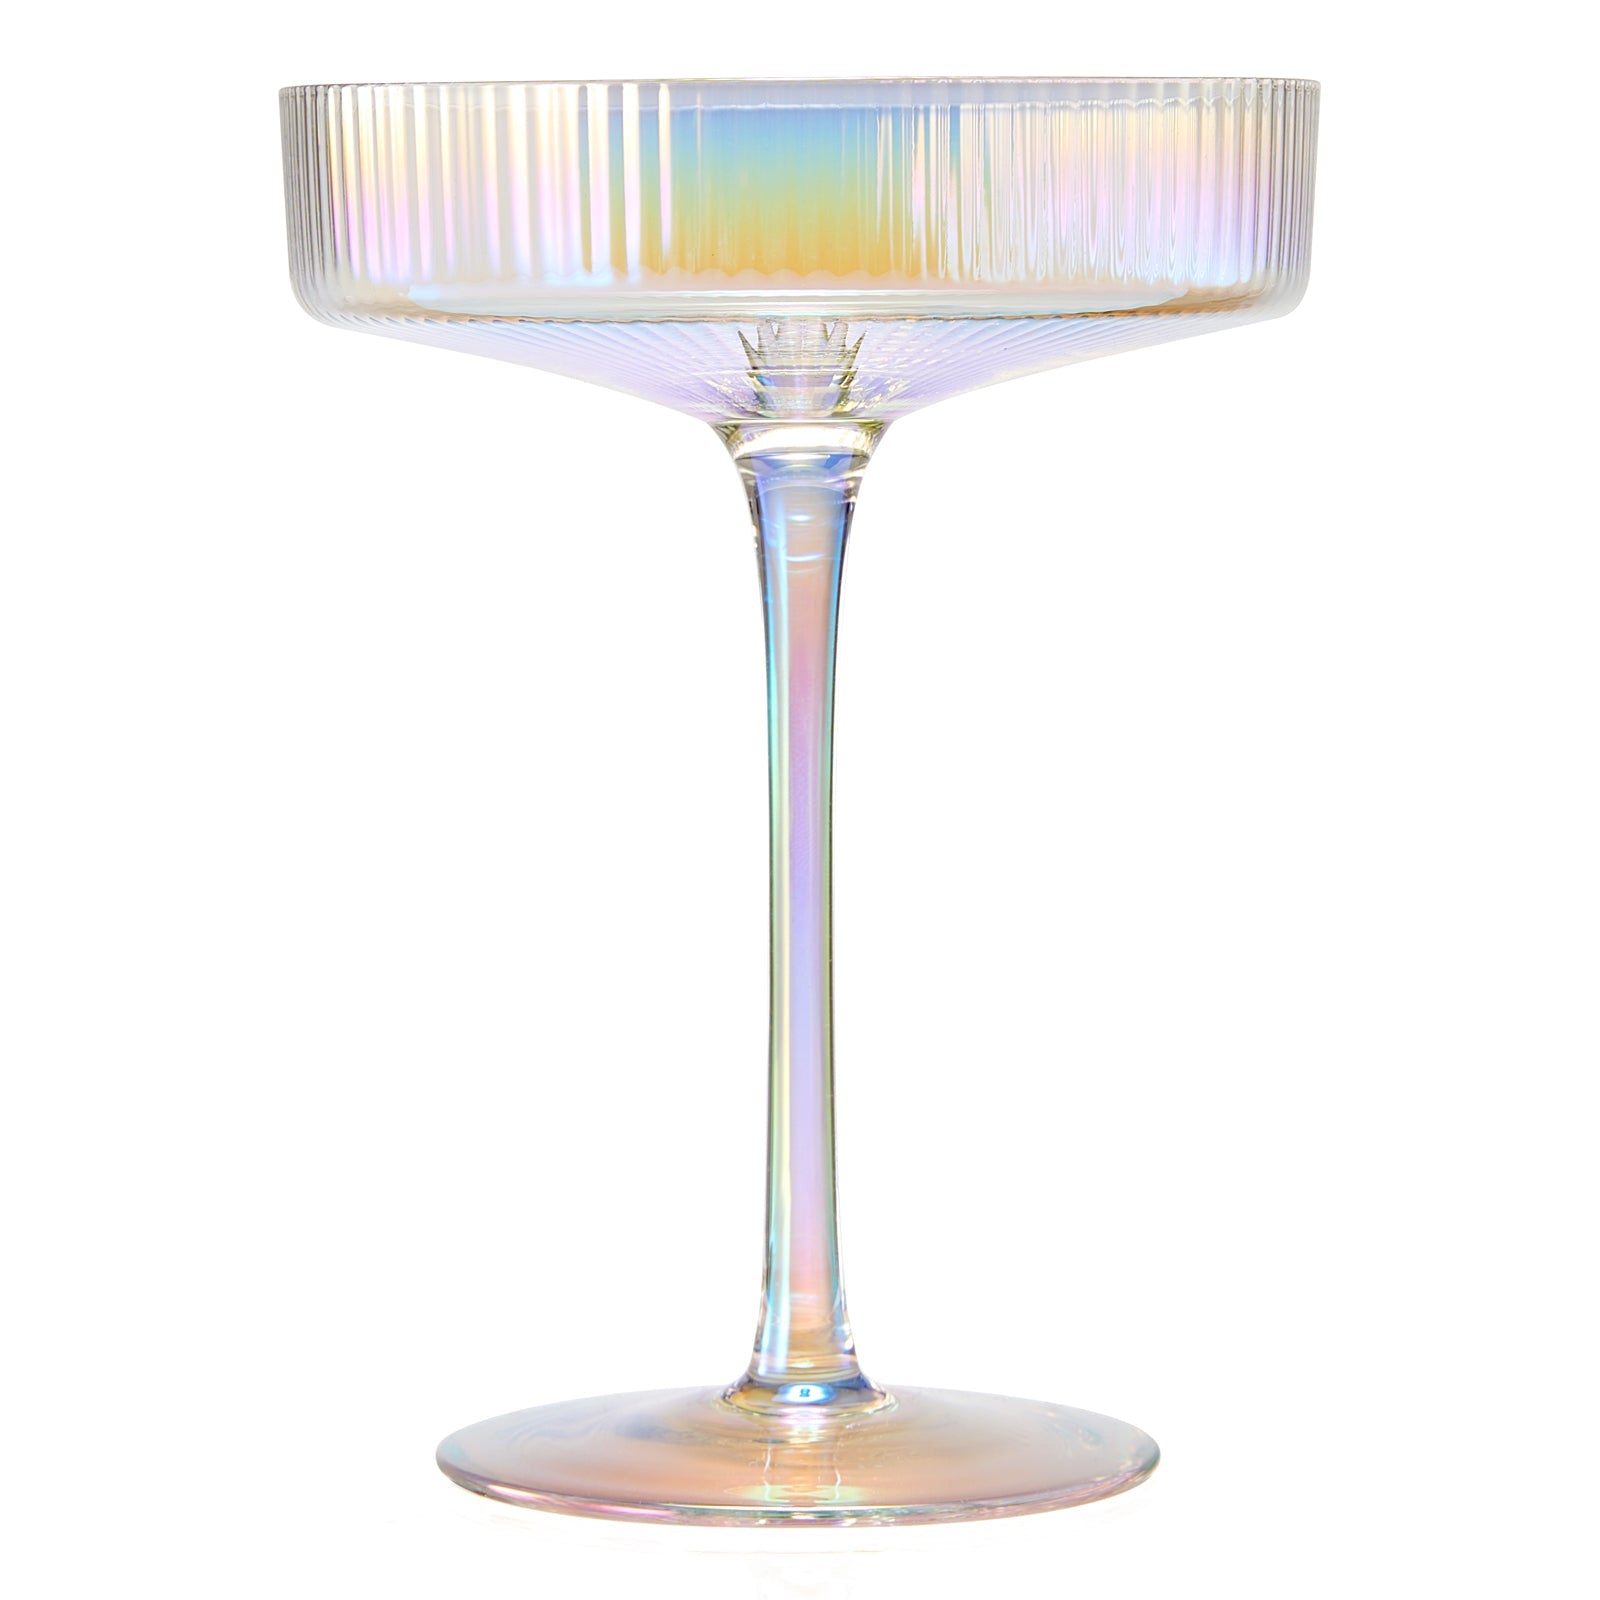 whatAmug Set of 2 Iridescent Champagne Coupe Glasses, Rainbow Ribbed Glass  Set Gifts, Colorful Cockt…See more whatAmug Set of 2 Iridescent Champagne